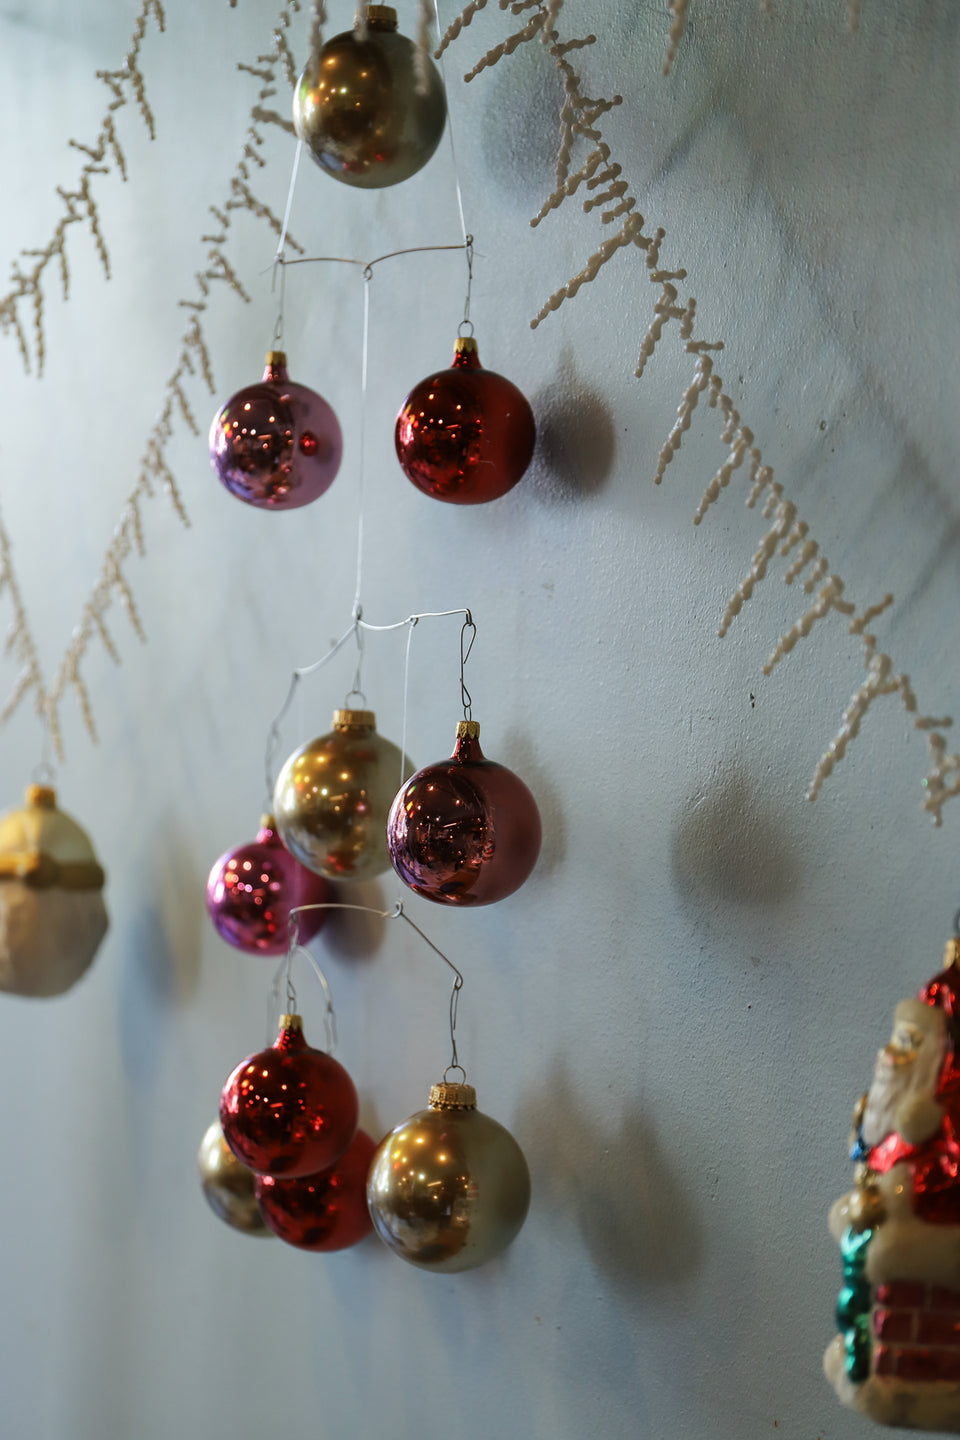 Vintage Blown Glass Christmas Ornament/ヴィンテージ クリスマス オーナメント 吹きガラス レトロ